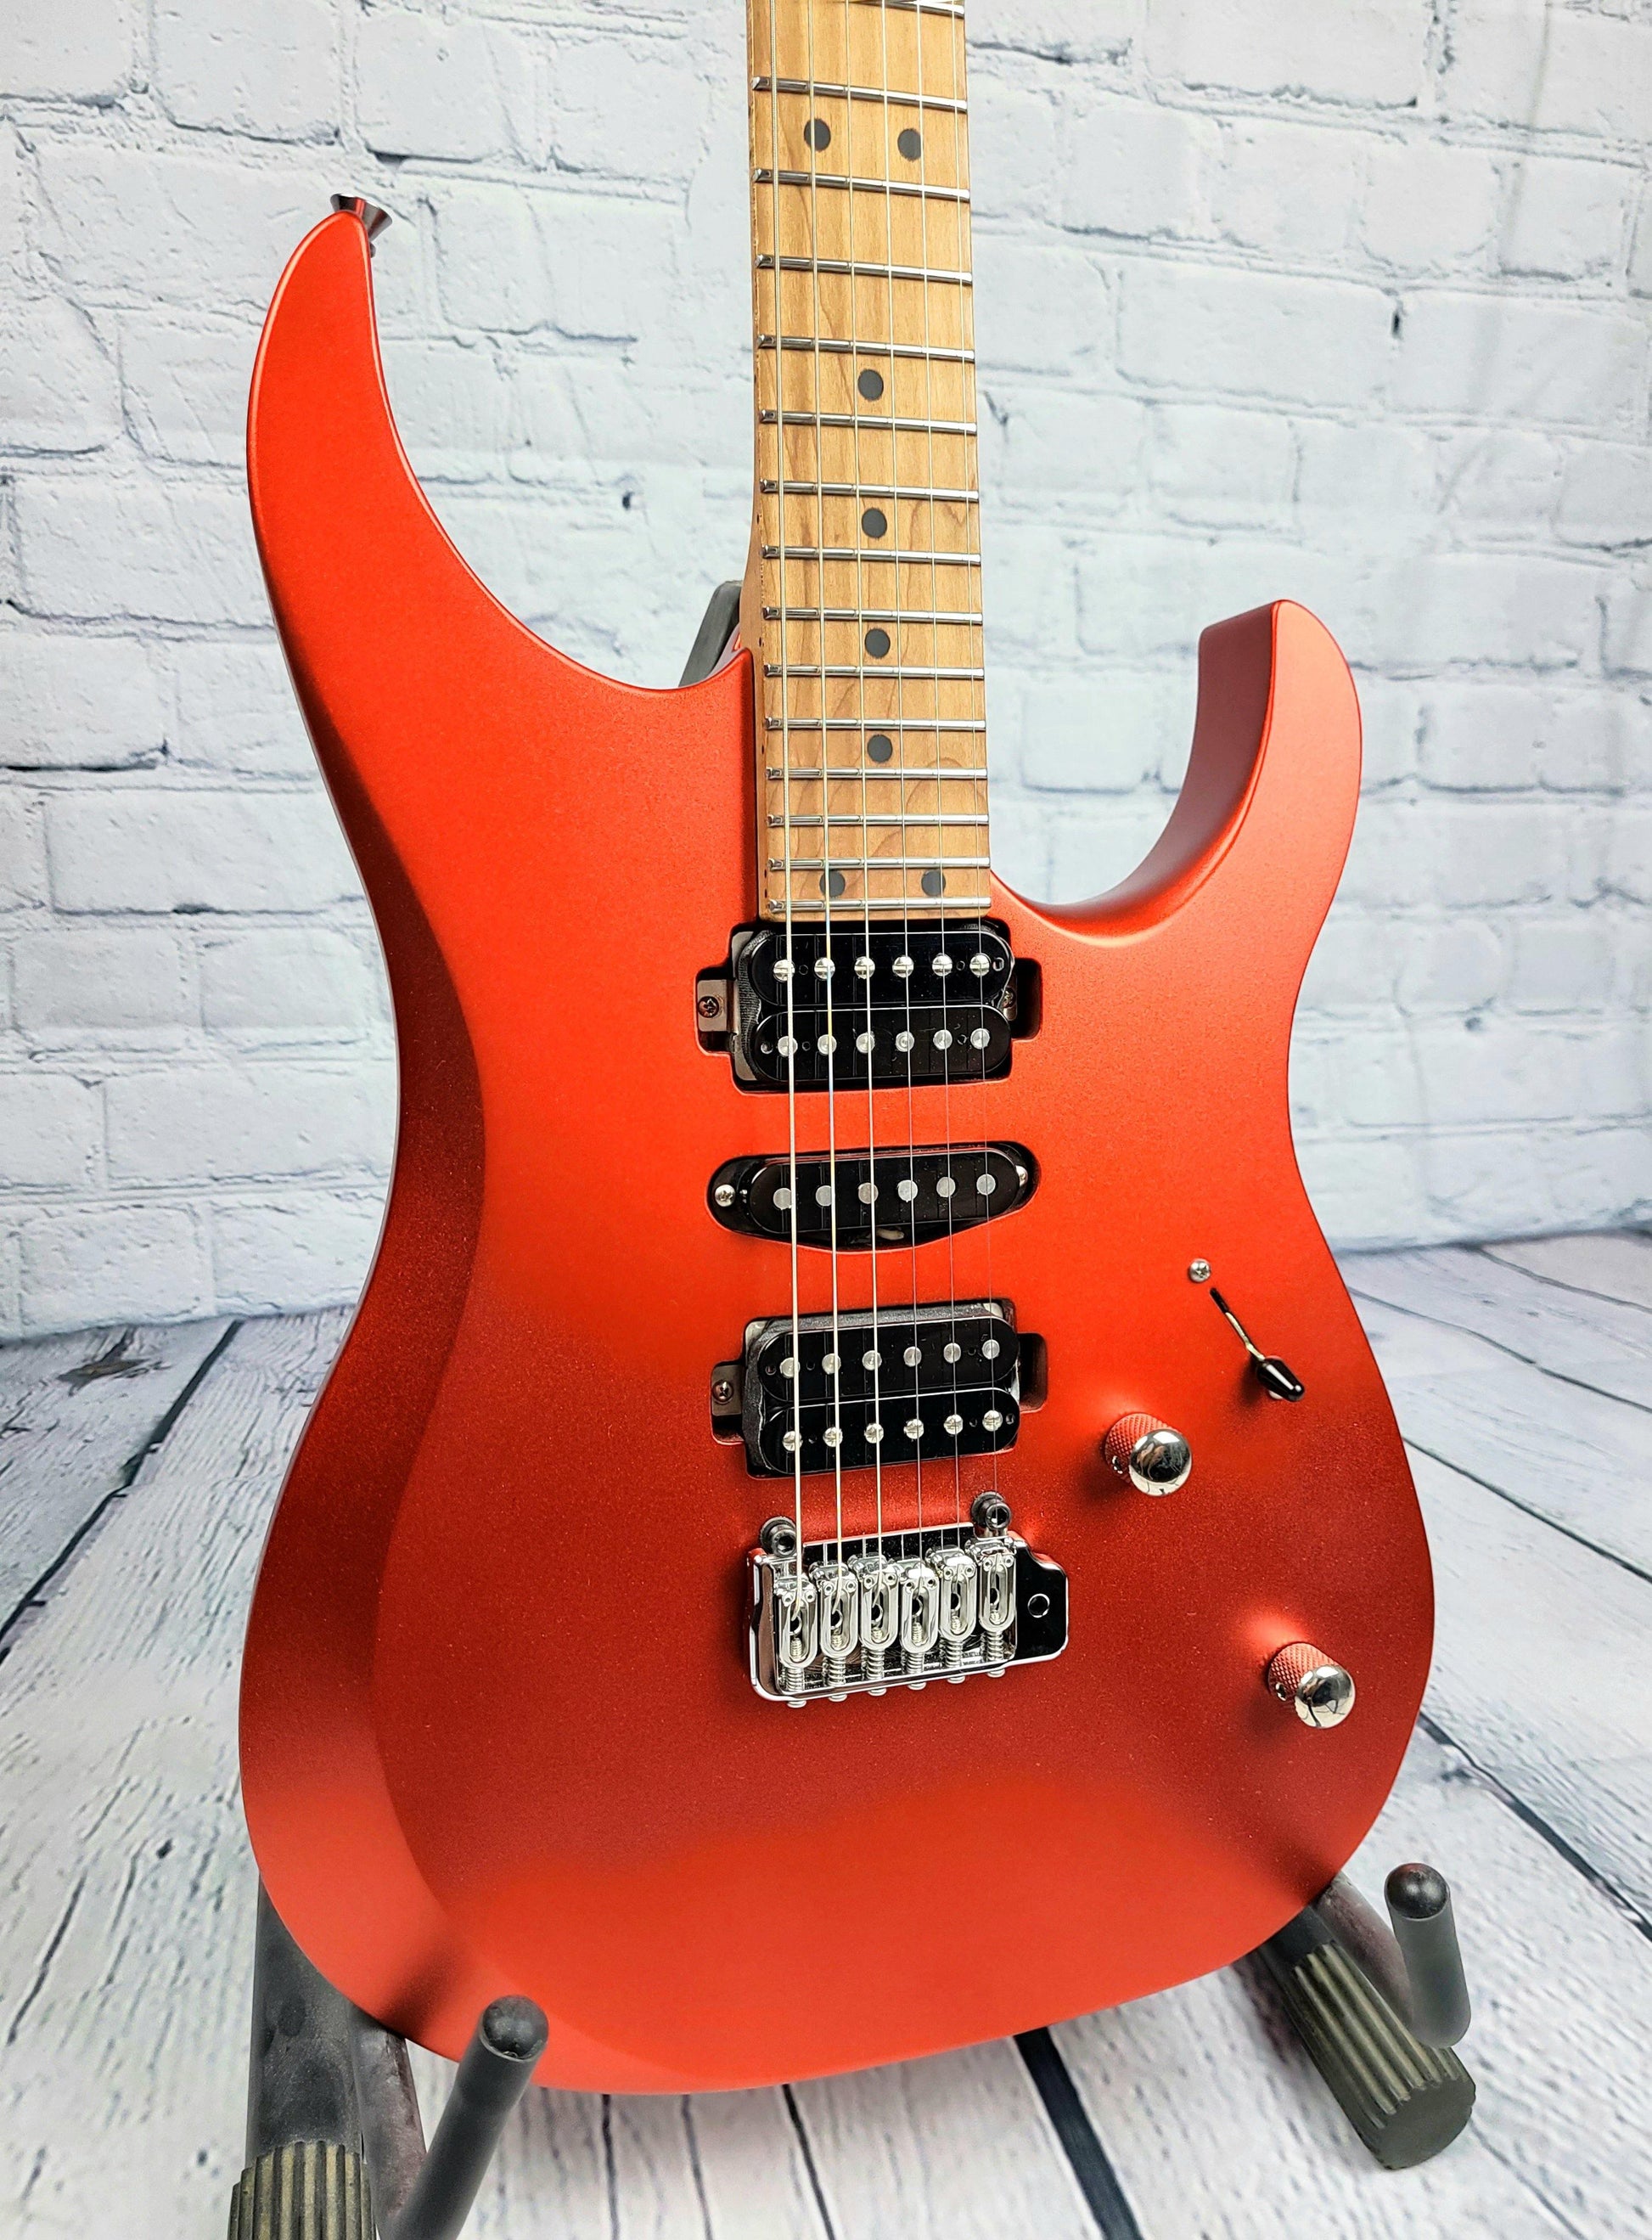 LSL Instruments XT4 One Series Roasted Maple Neck Metallic Candy Apple Red - Guitar Brando